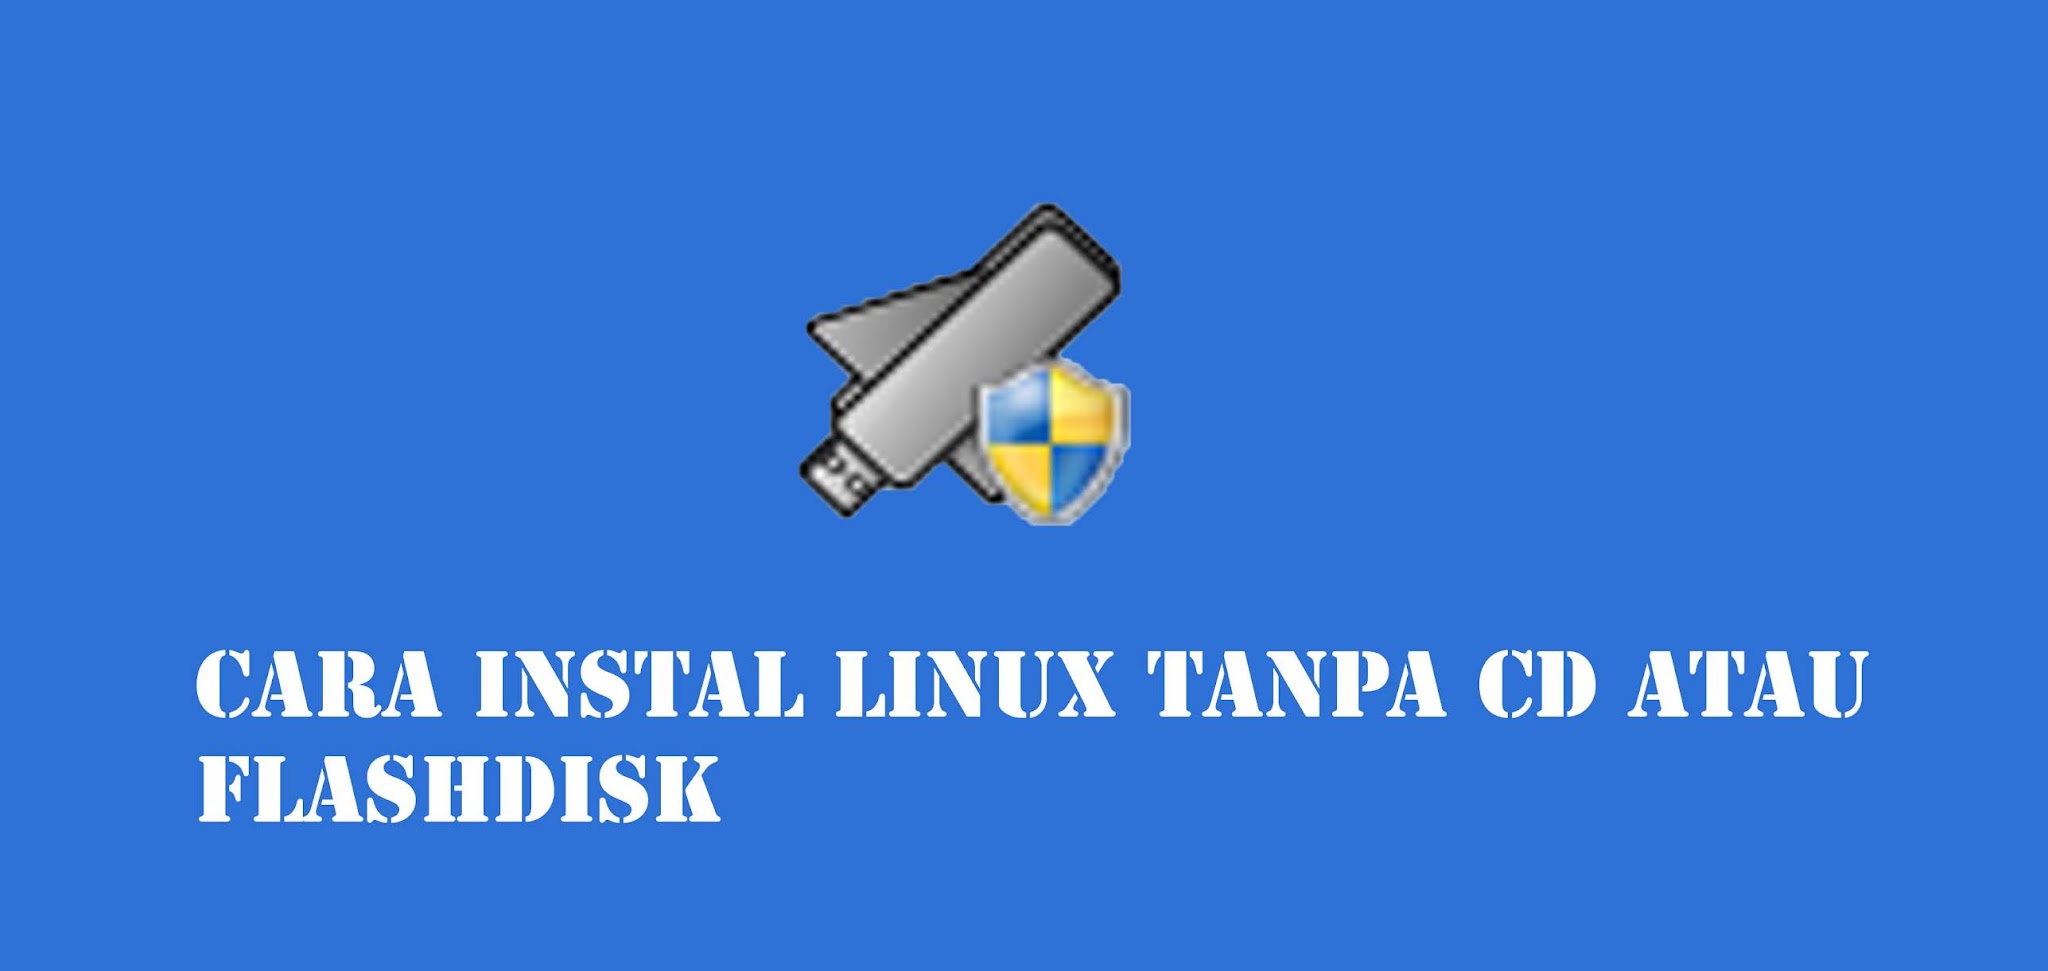 Cara Install linux tanpa cd dan flashdisk 